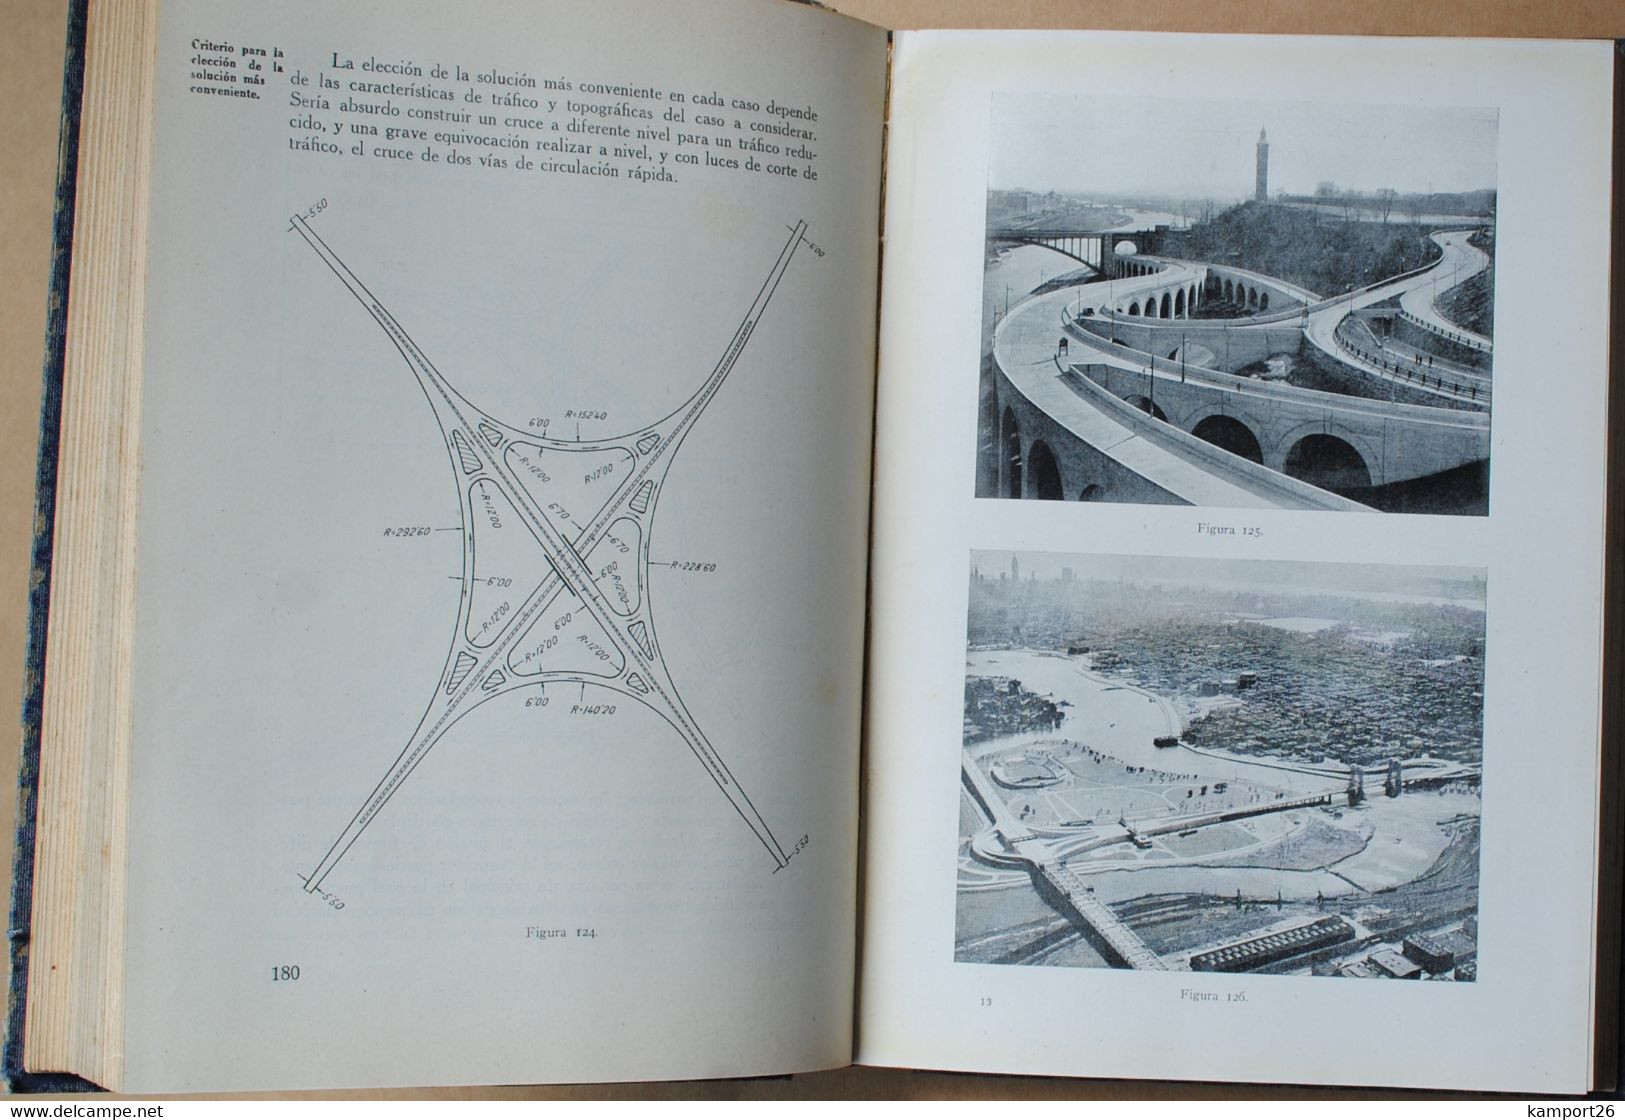 1949 CAMINOS Jose Luis Escario ILLUSTRÉ Roads ILLUSTRATED History TECHNOLOGY Сonstruction - Lifestyle